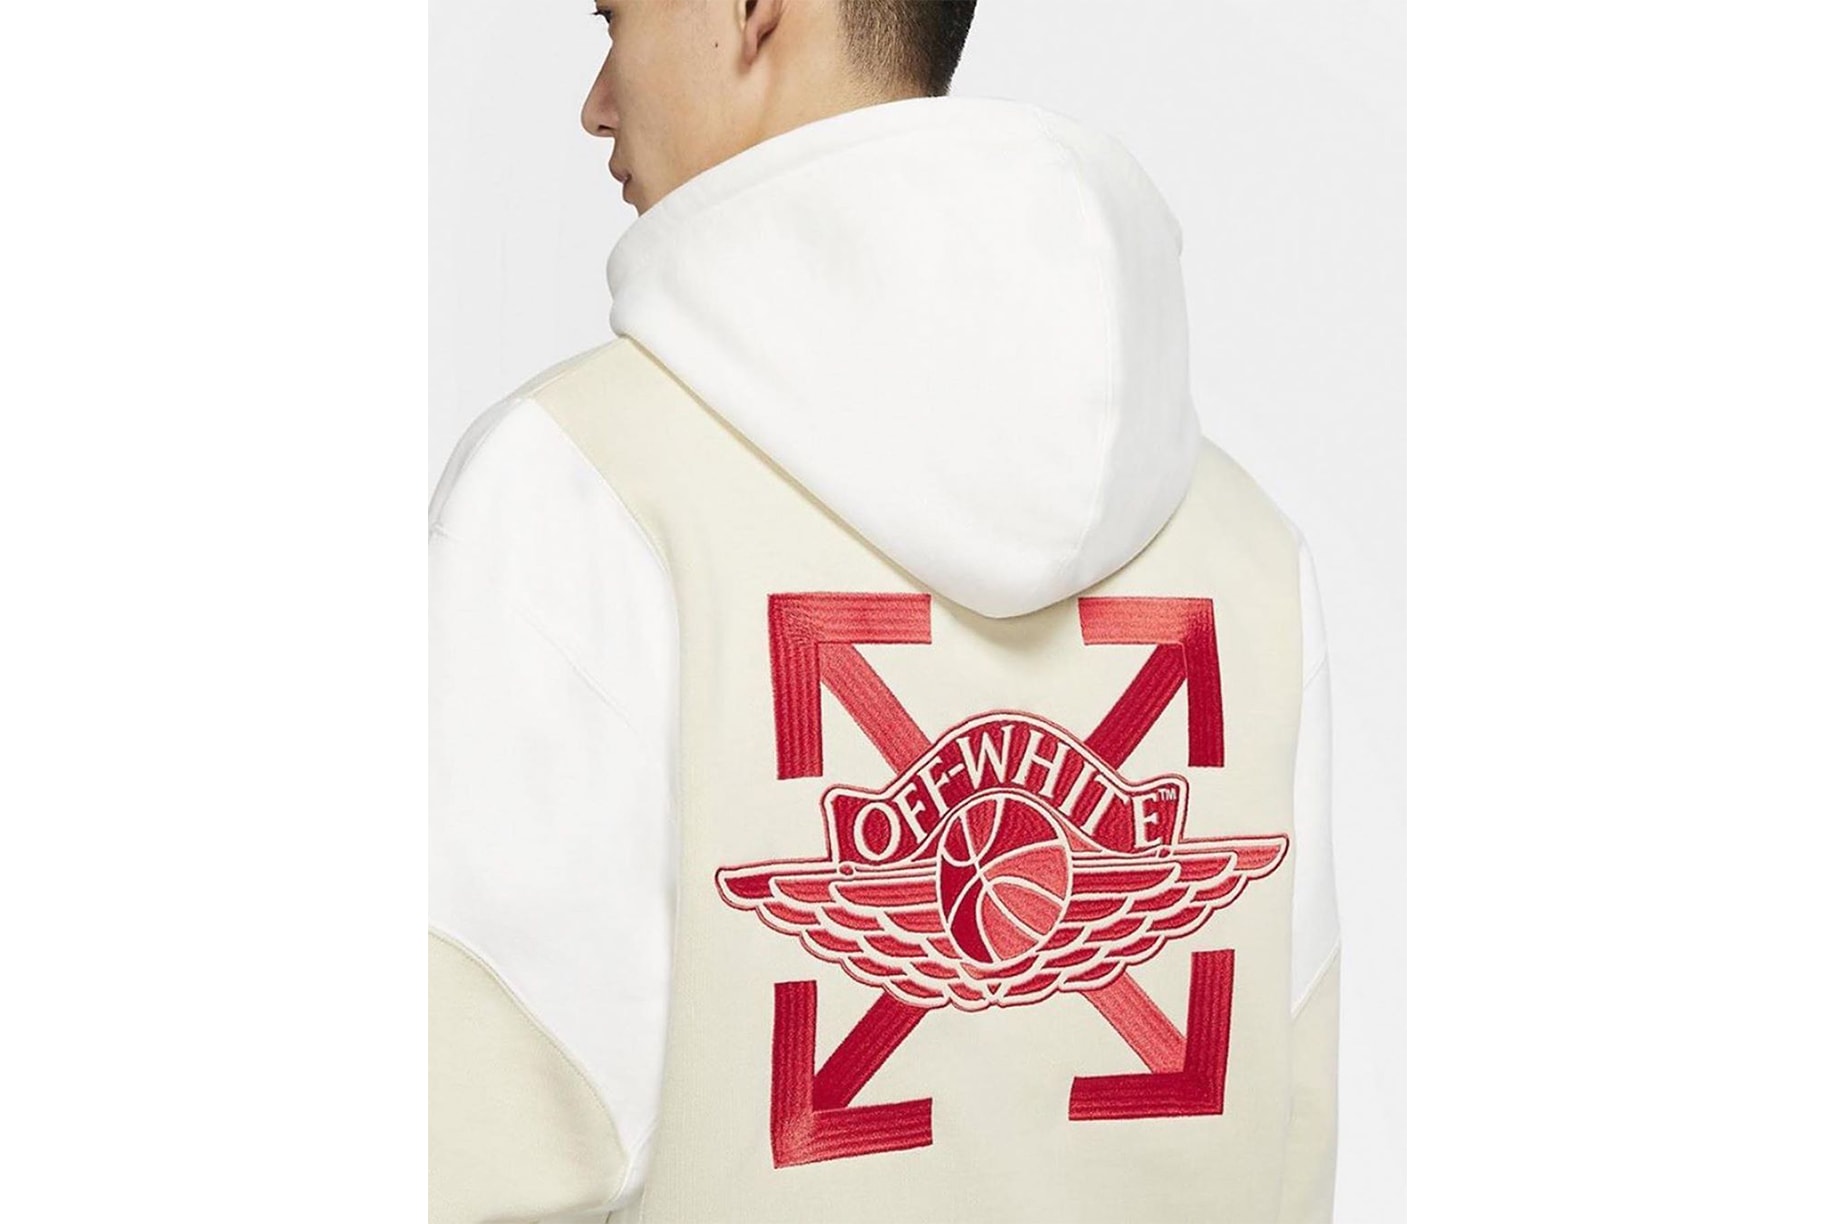 off-white jordan brand collaboration capsule t-shirts hoodies air jordan 5 aj5 sail release date info